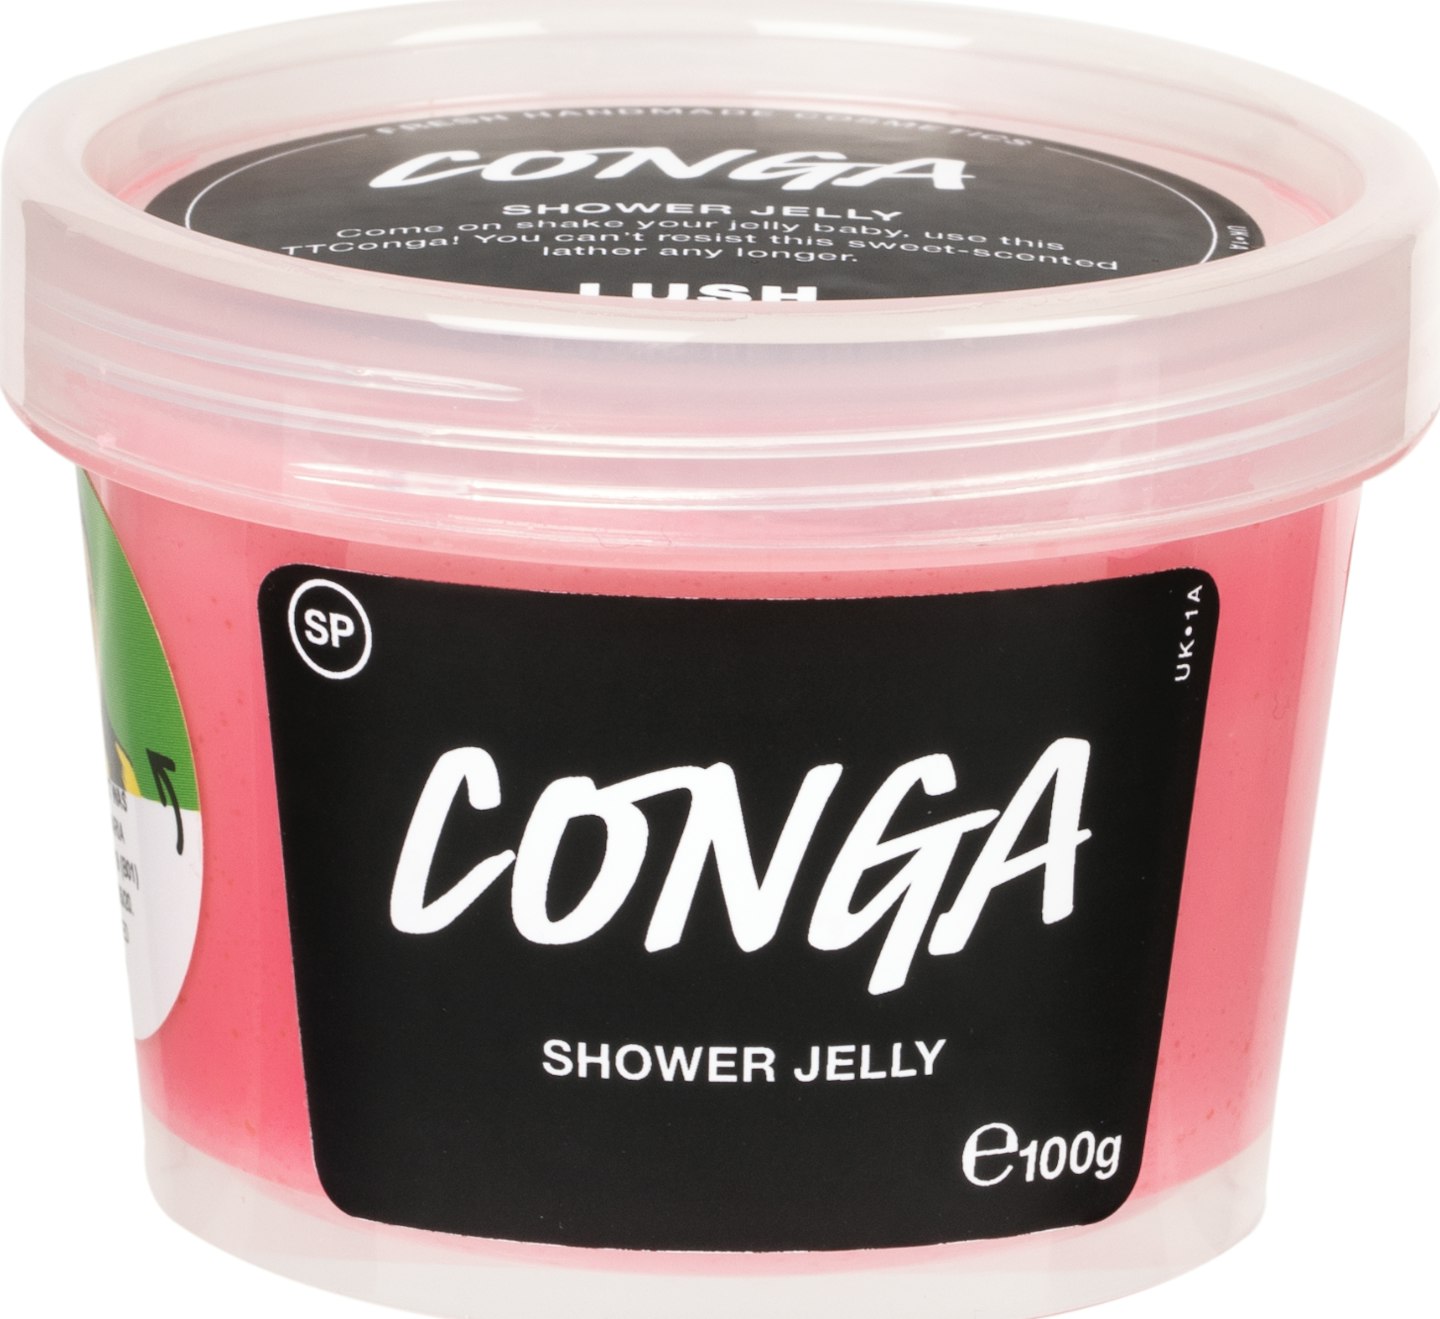 Lush Conga Shower Jelly, £5.50